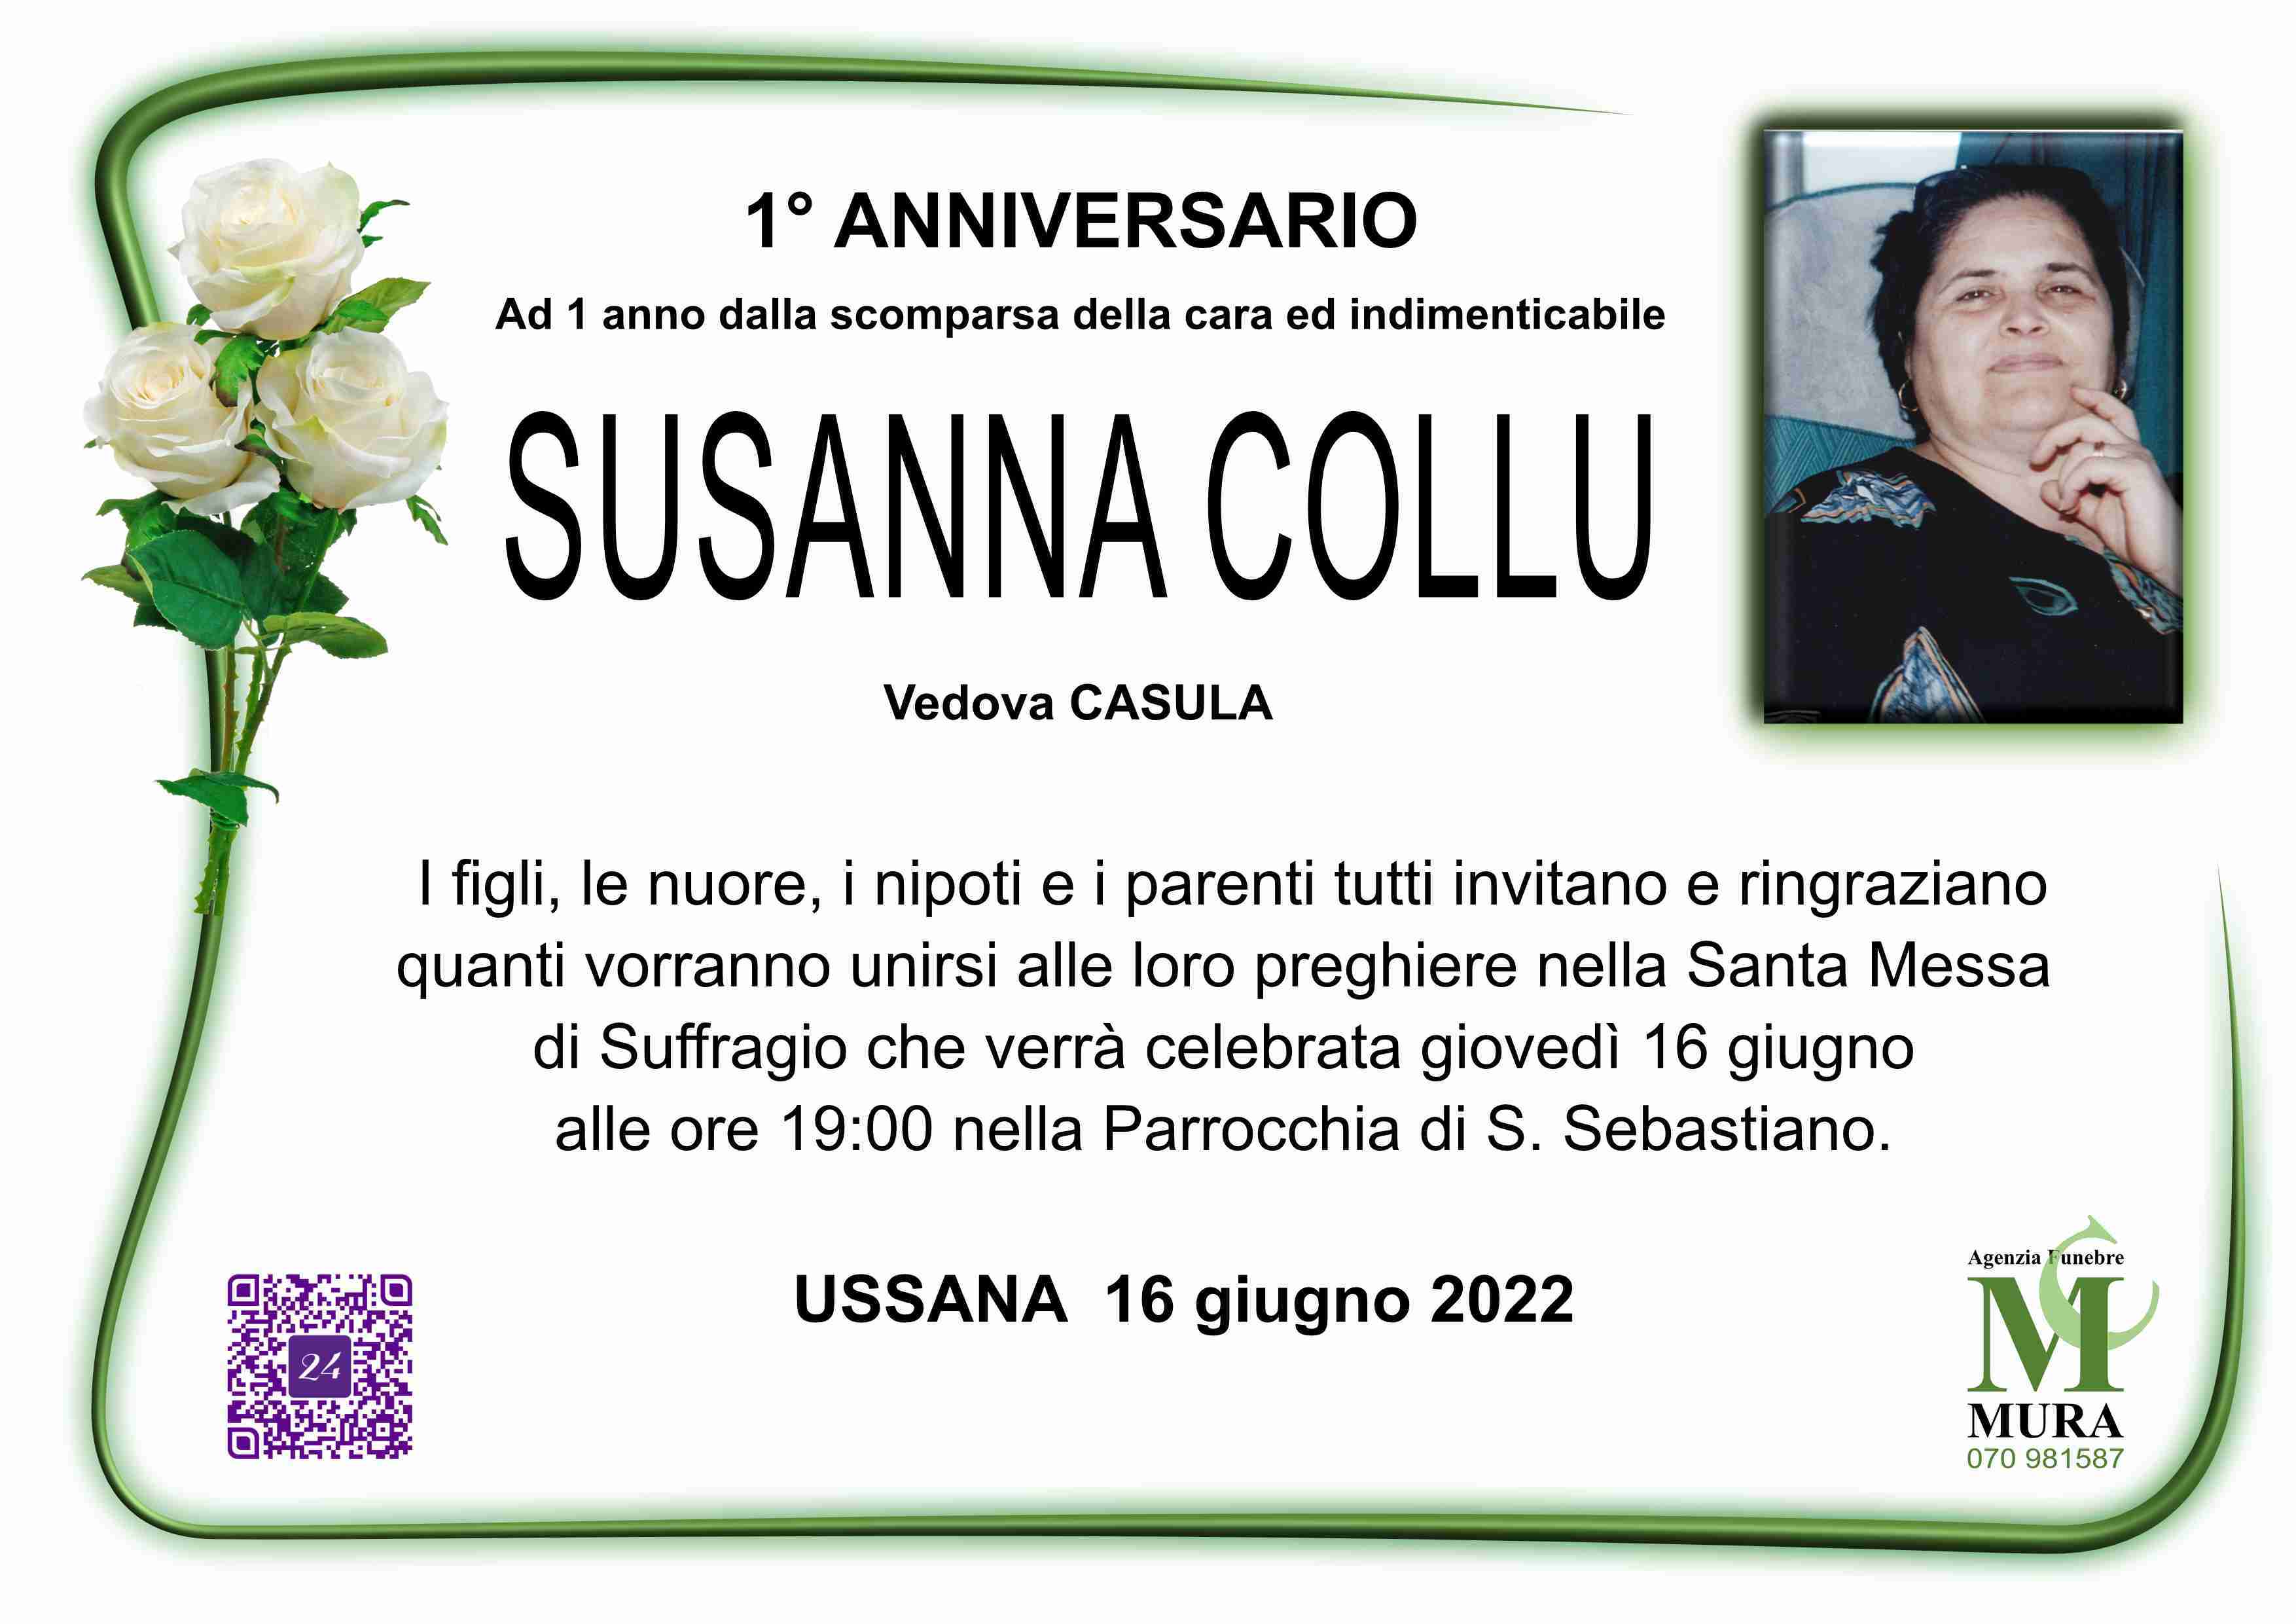 Susanna Collu